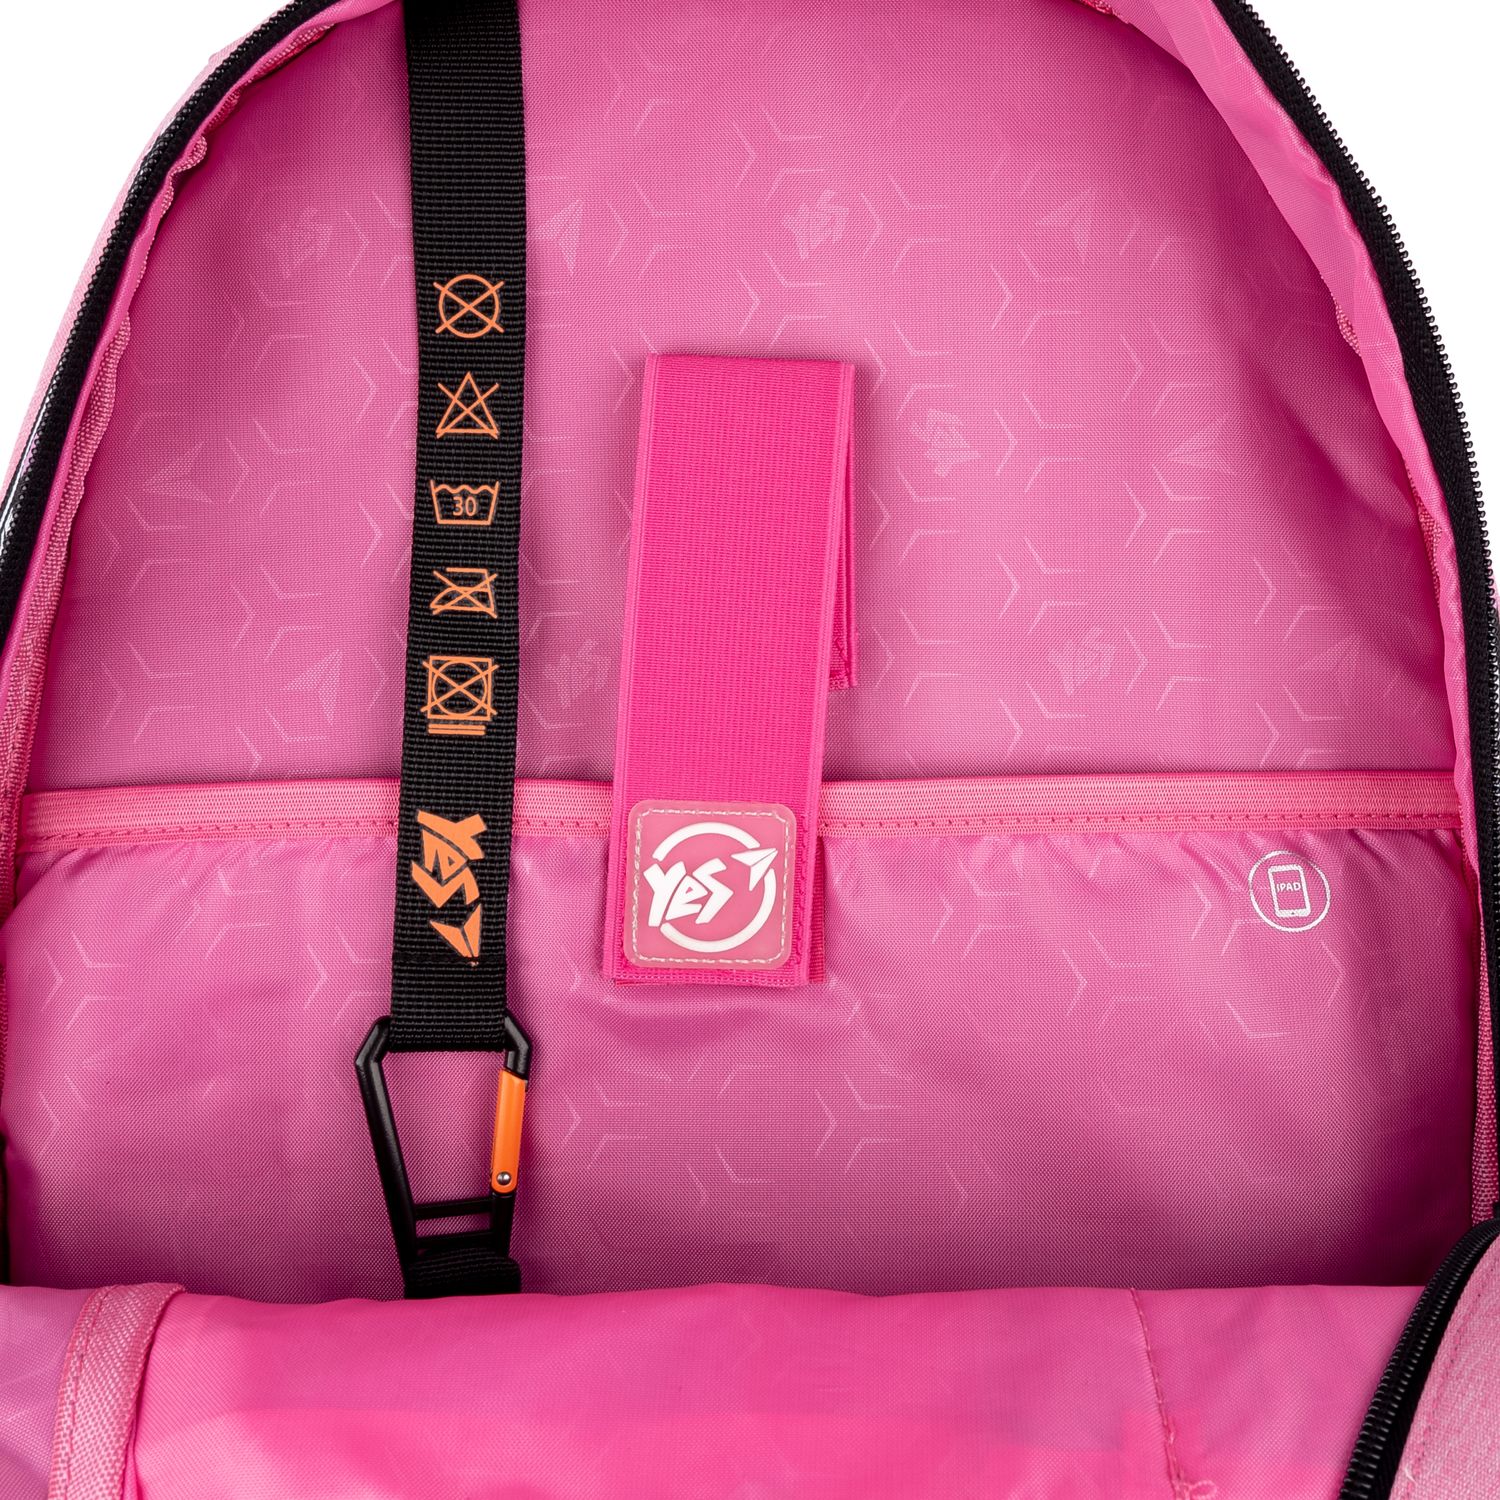 Рюкзак Yes TS-61 Girl Wonderful, черный с розовым (558908) - фото 14